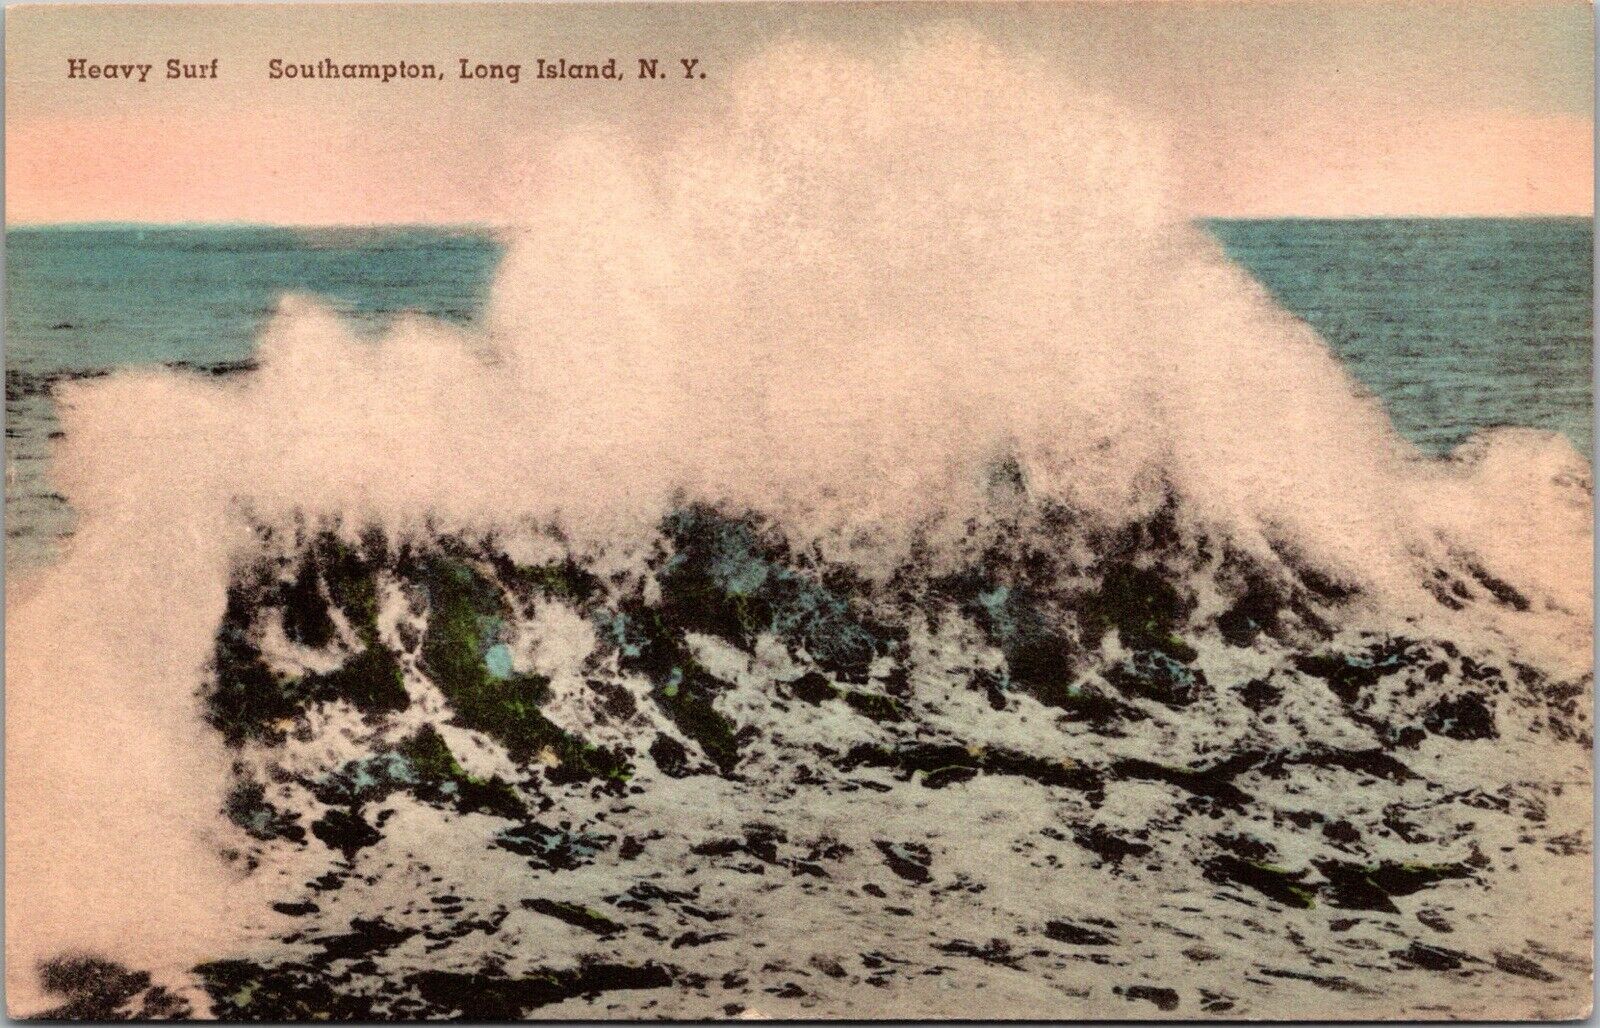 Southampton Long Island NY Hand Colored Vintage Postcard Heavy Surf JD3